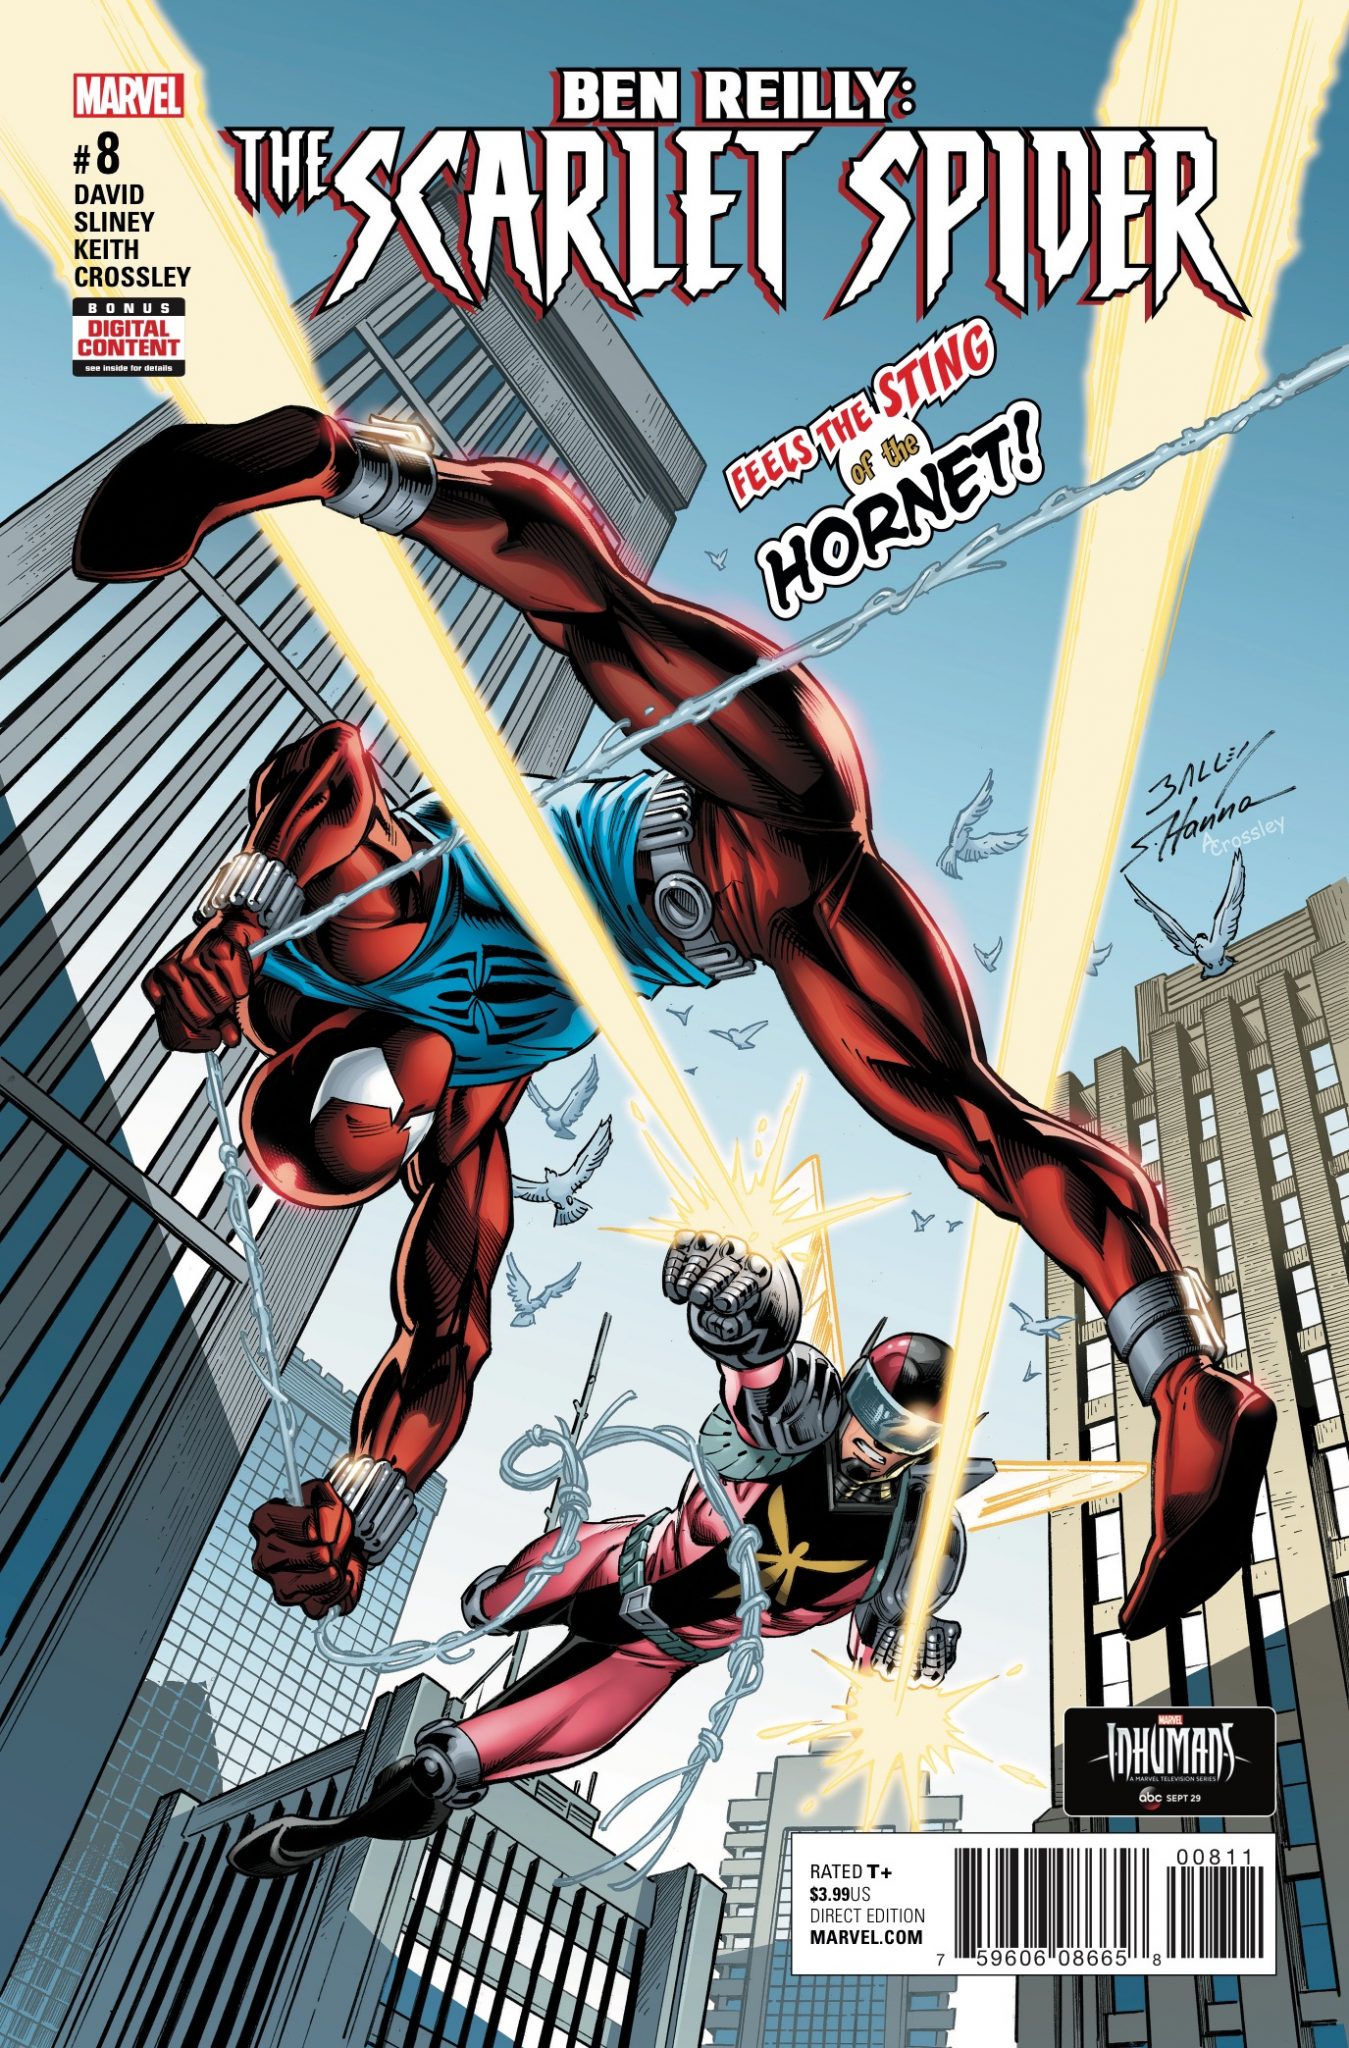 Marvel Preview: Ben Reilly: Scarlet Spider #8